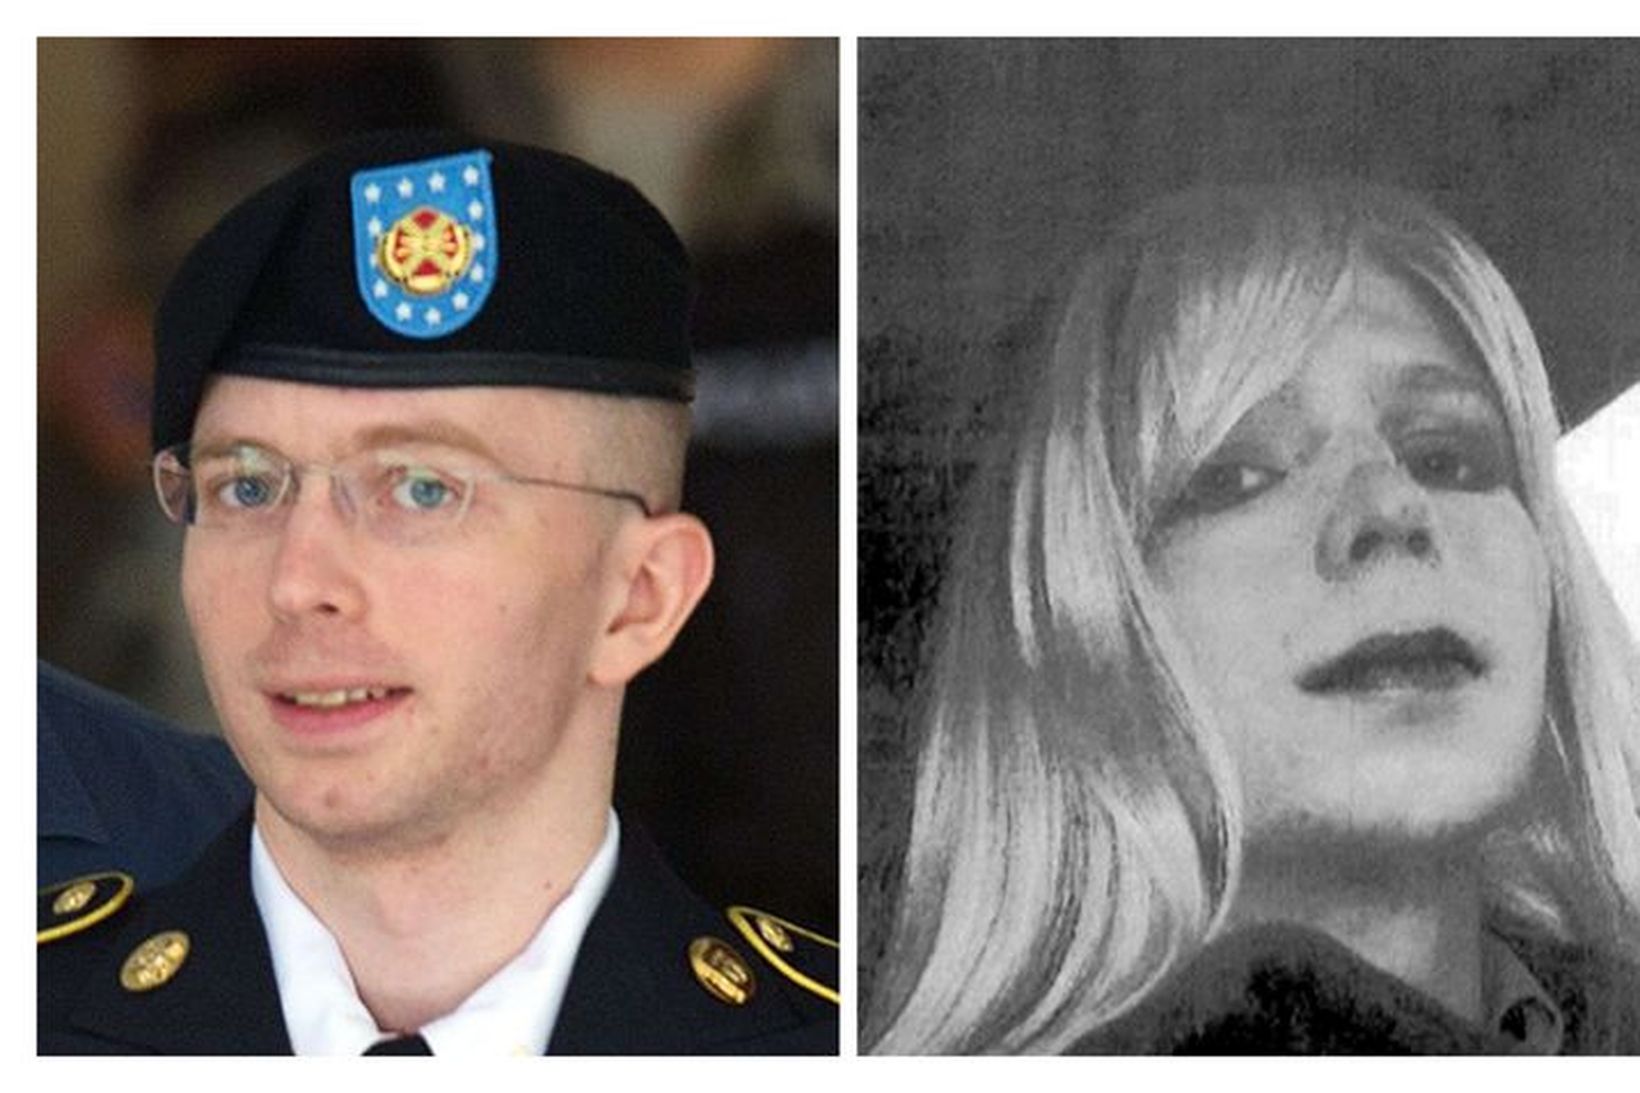 Bradley Manning/Chelsea Manning